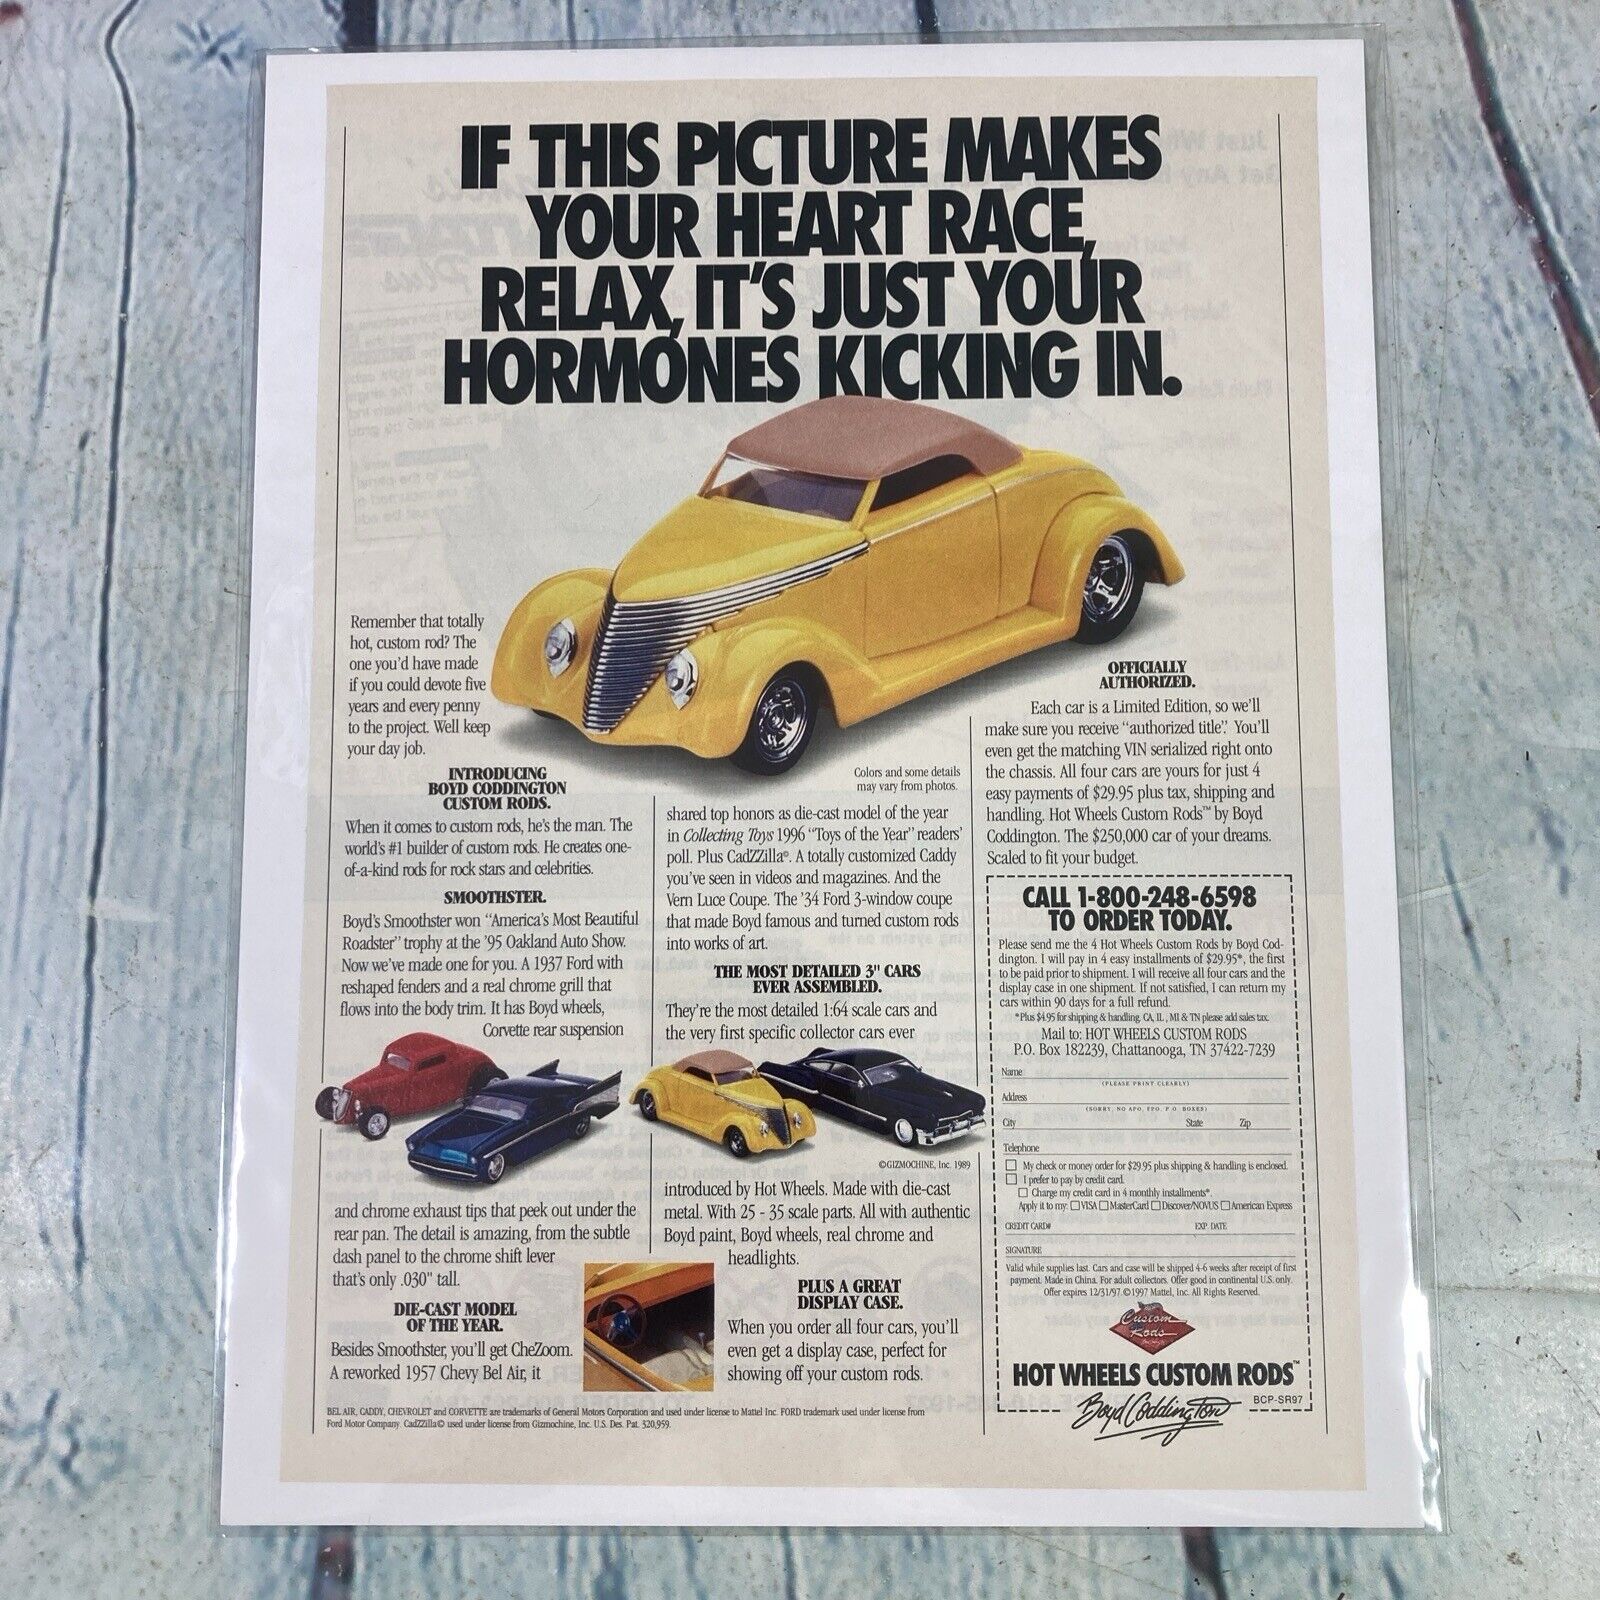 1997 Hot Wheels Custom Rods Cars Vintage Print Ad/Poster Promo Art Magazine Page